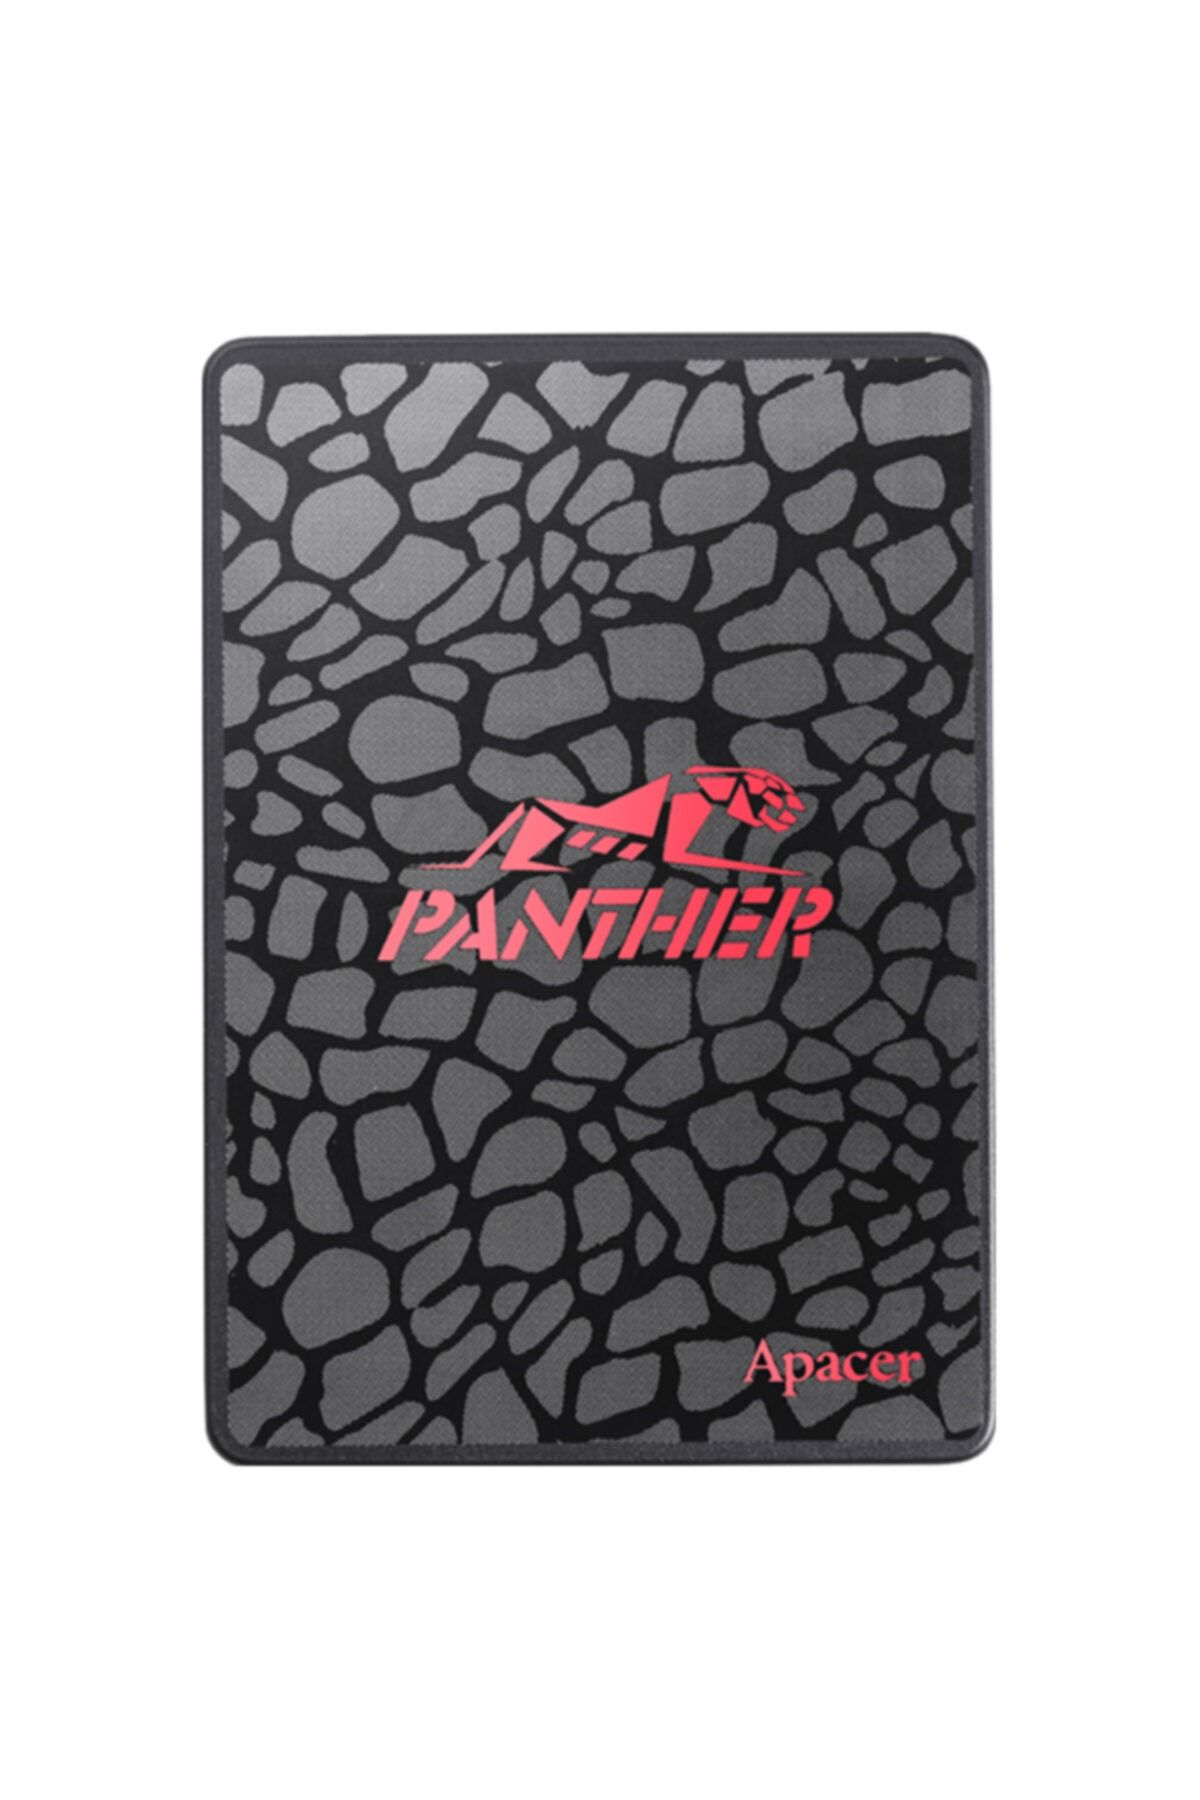 Apacer As350 Panther Ap1tbas350-1 1tb 560/540mb/s 2.5" Sata 3 Ssd Disk